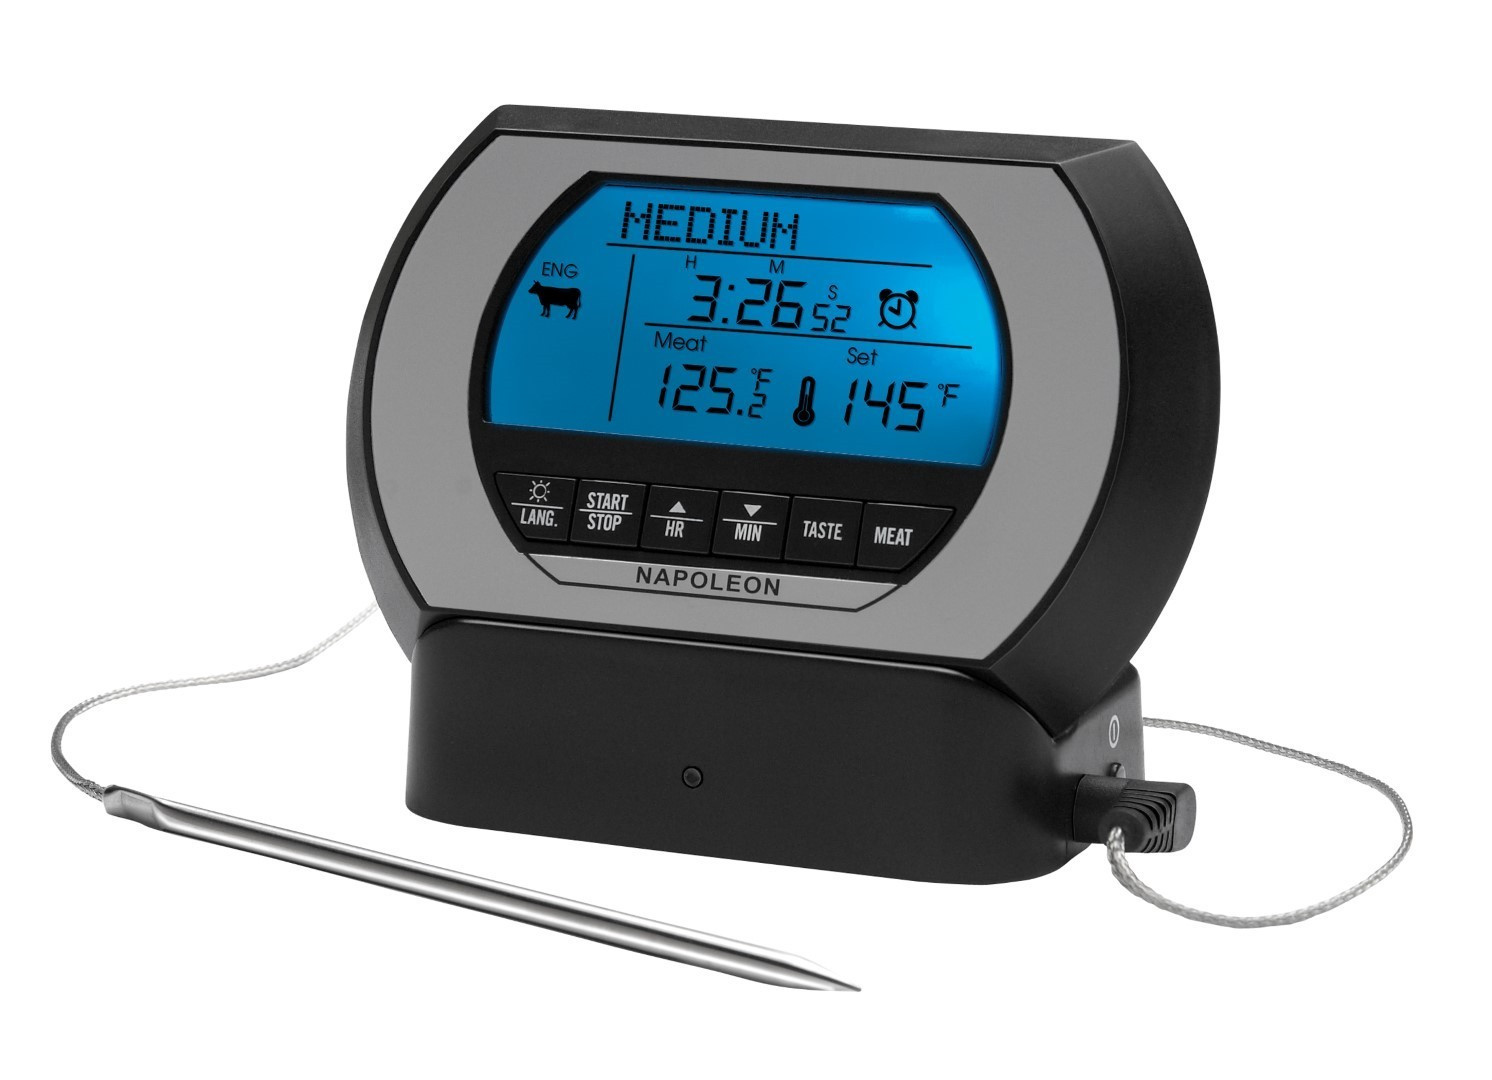 PRO draadloze digitale thermometer - Napoleon Grills